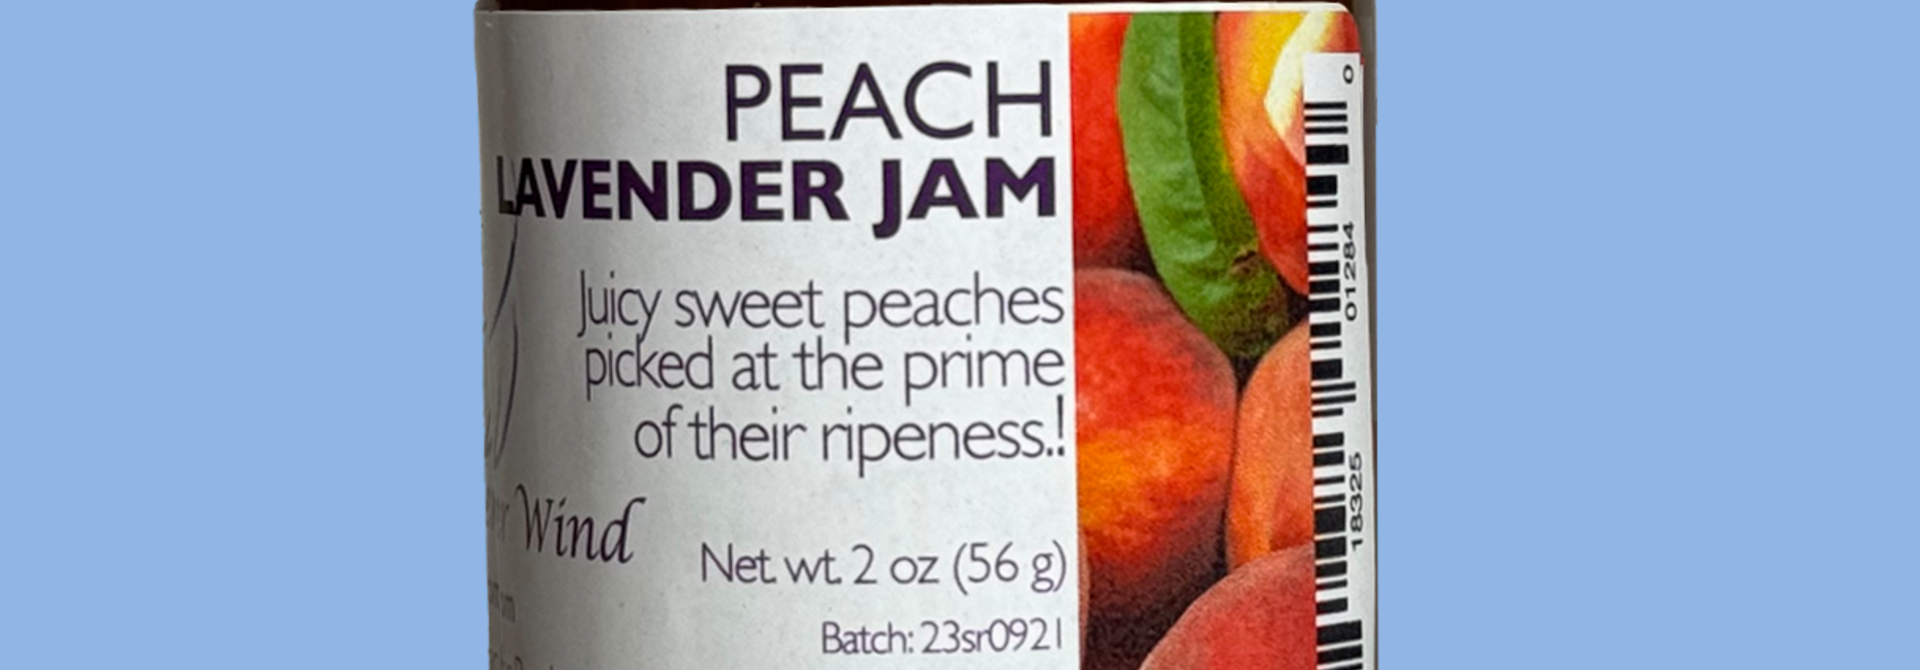 Peach Lavender Jam 2oz.